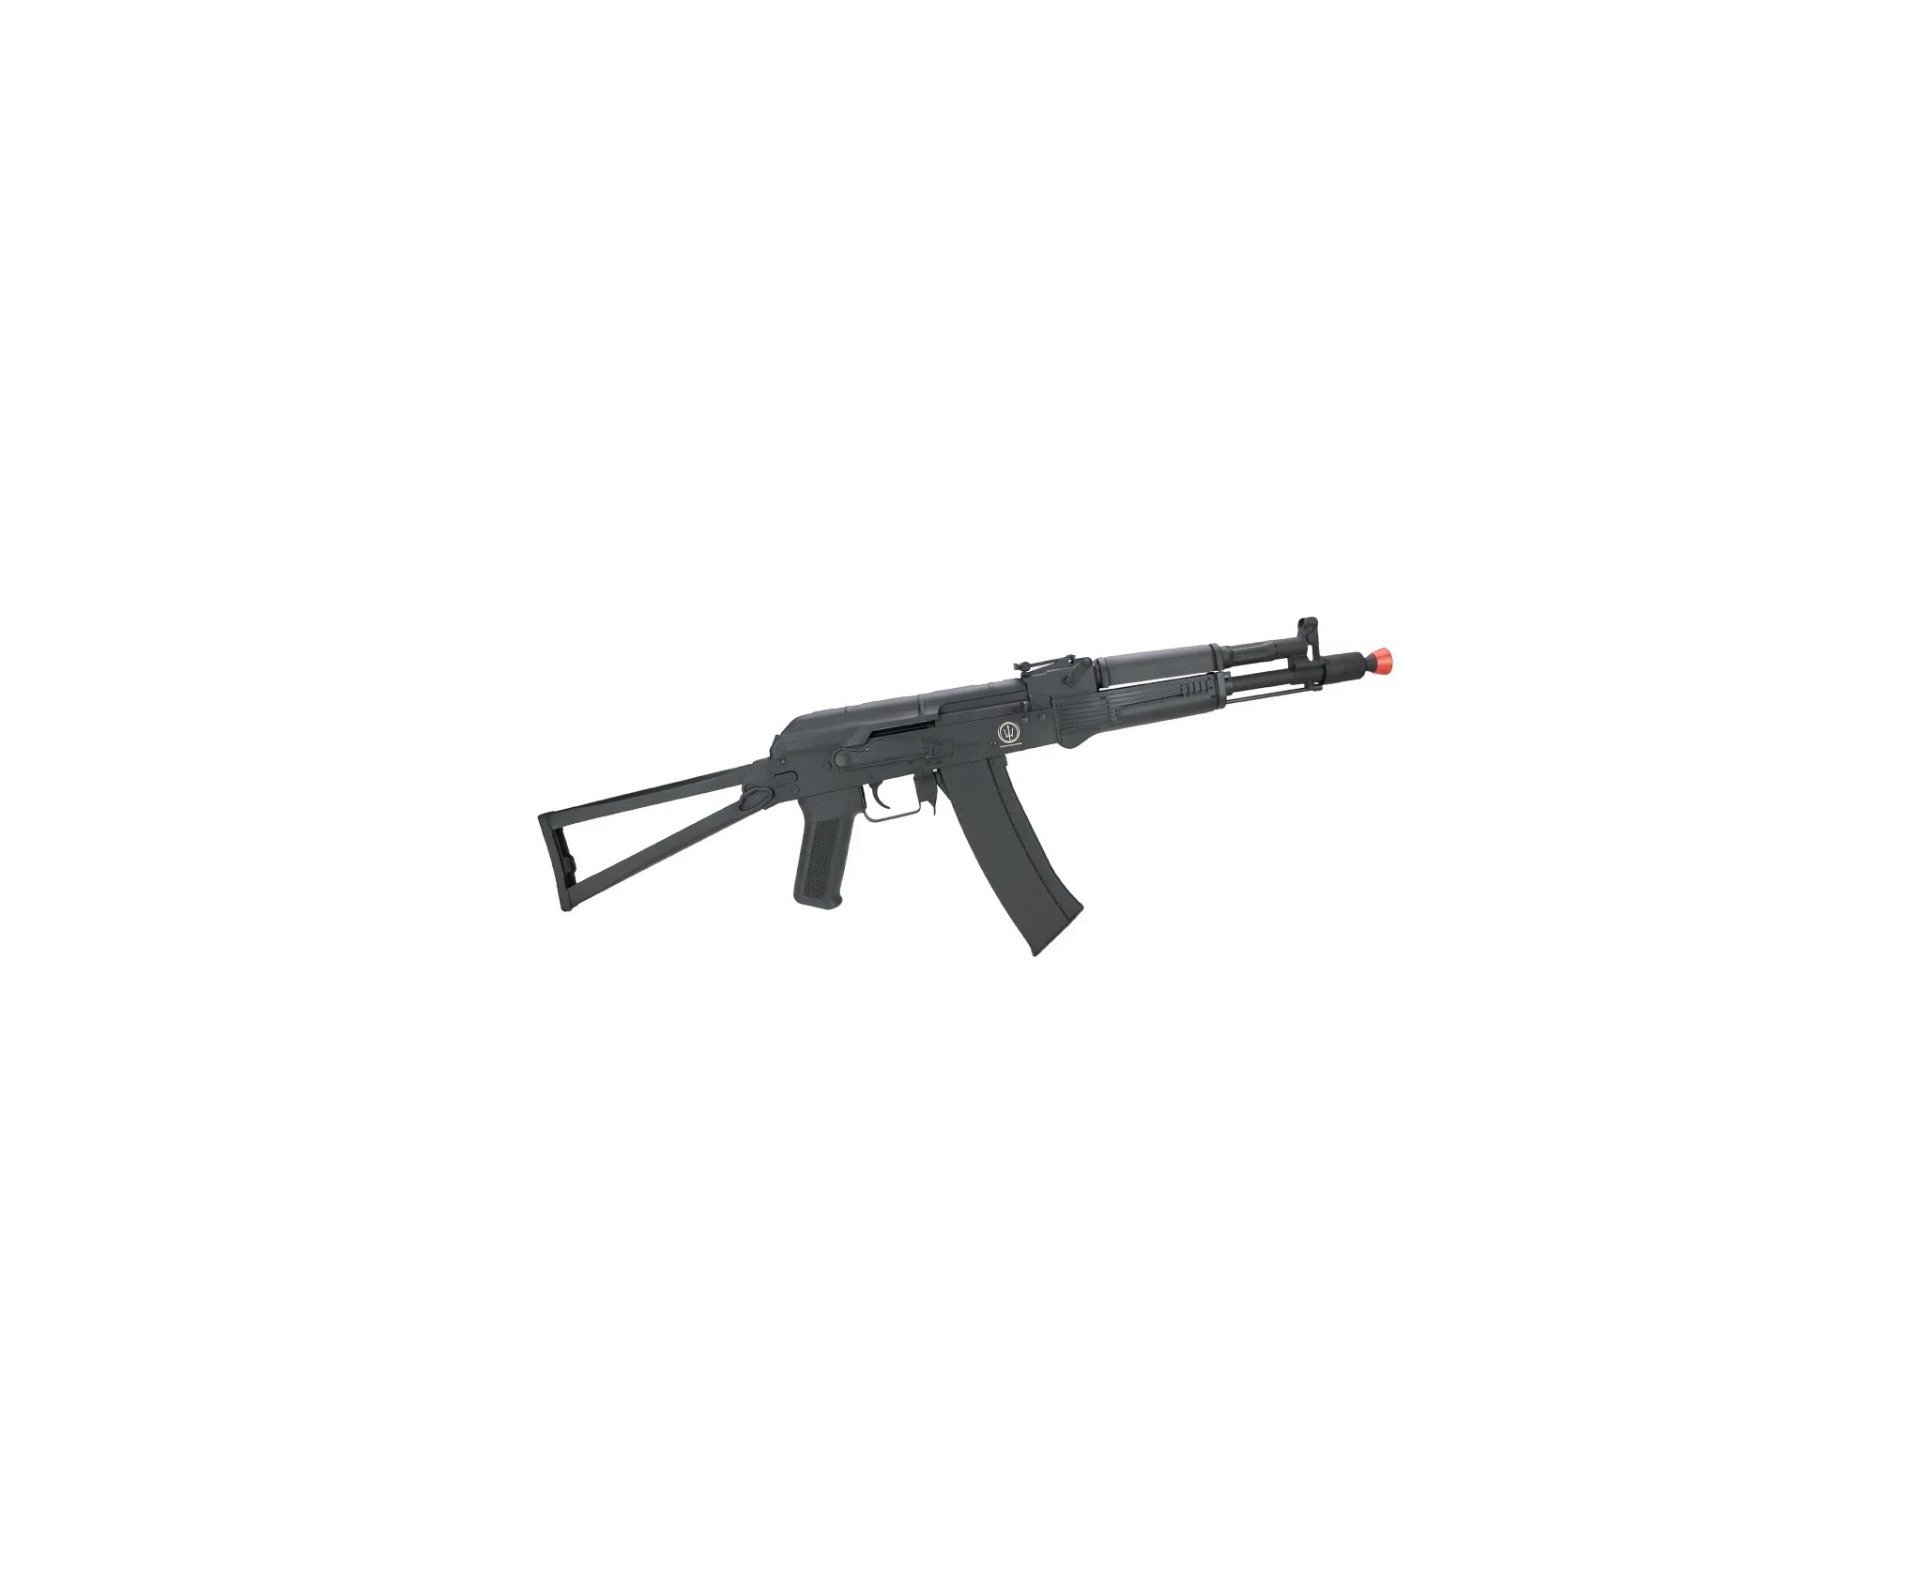 Rifle de Airsoft Neptune AK105S mosfet Full Metal 6mm - Rossi + Bateria + Carregador + Capa + BBS